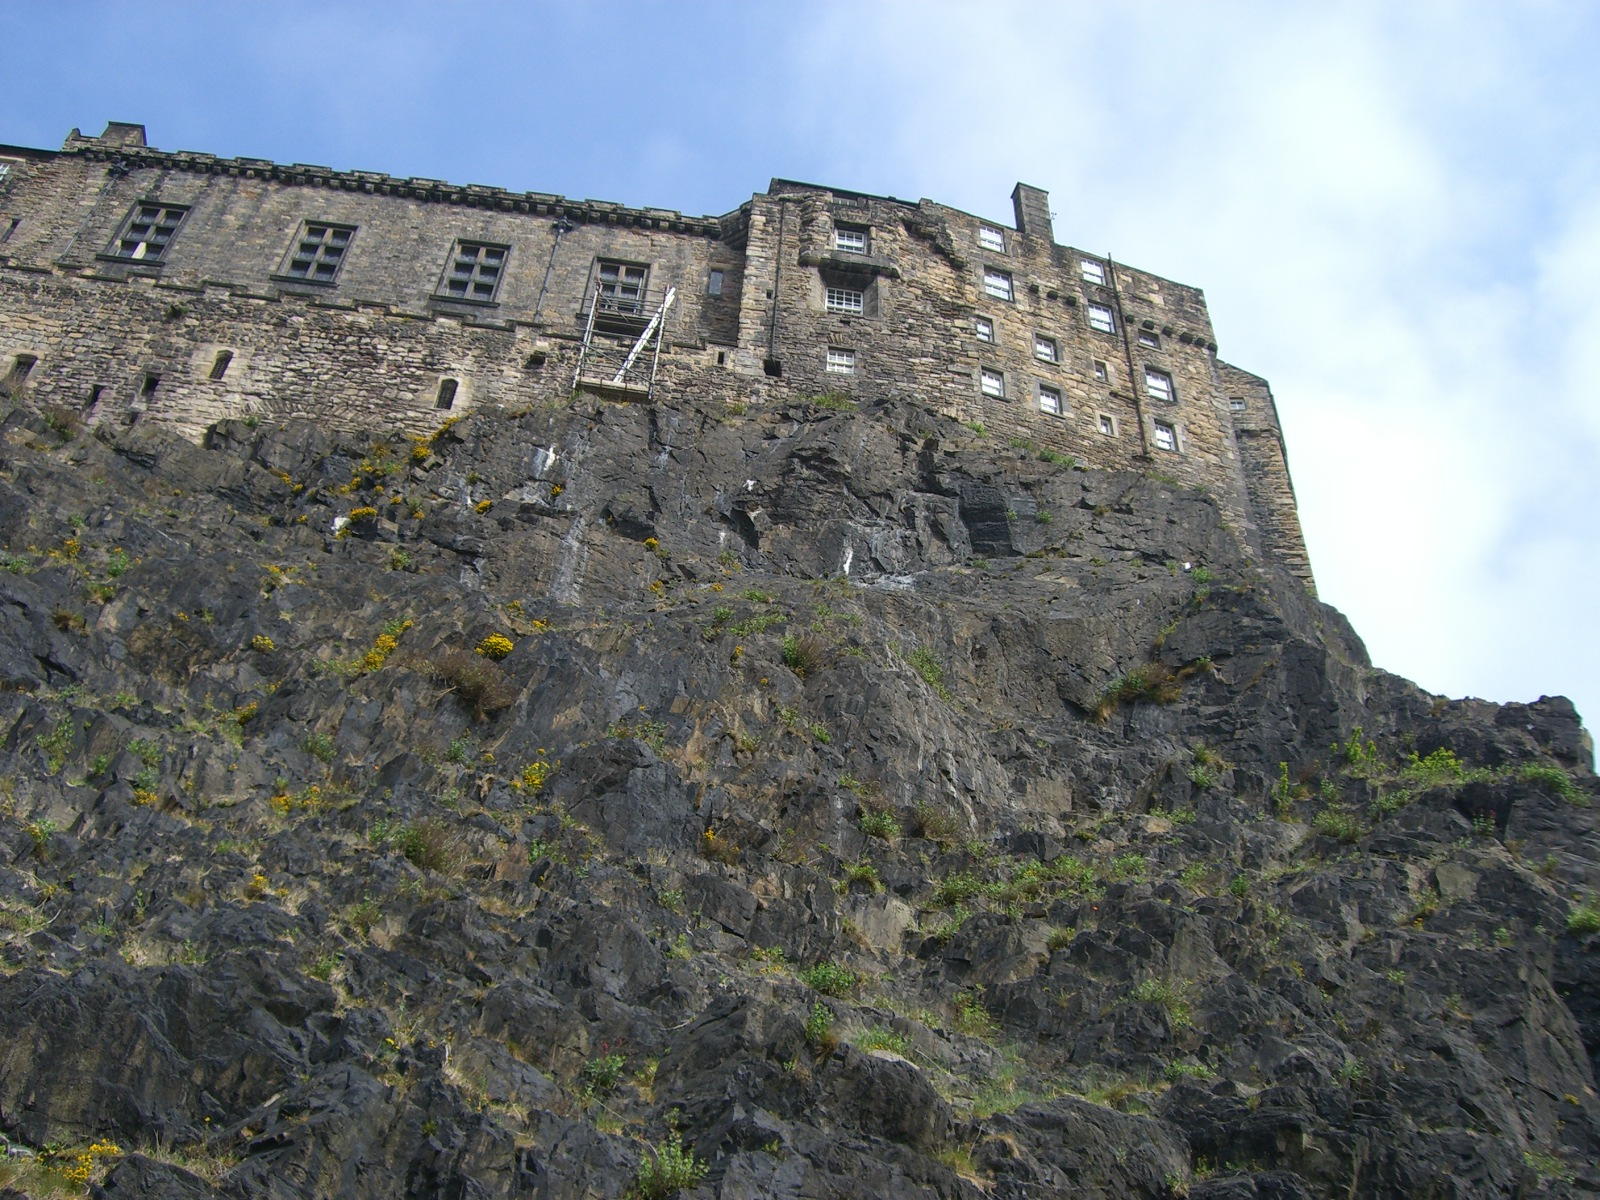 View of Edinburgh Castle from below